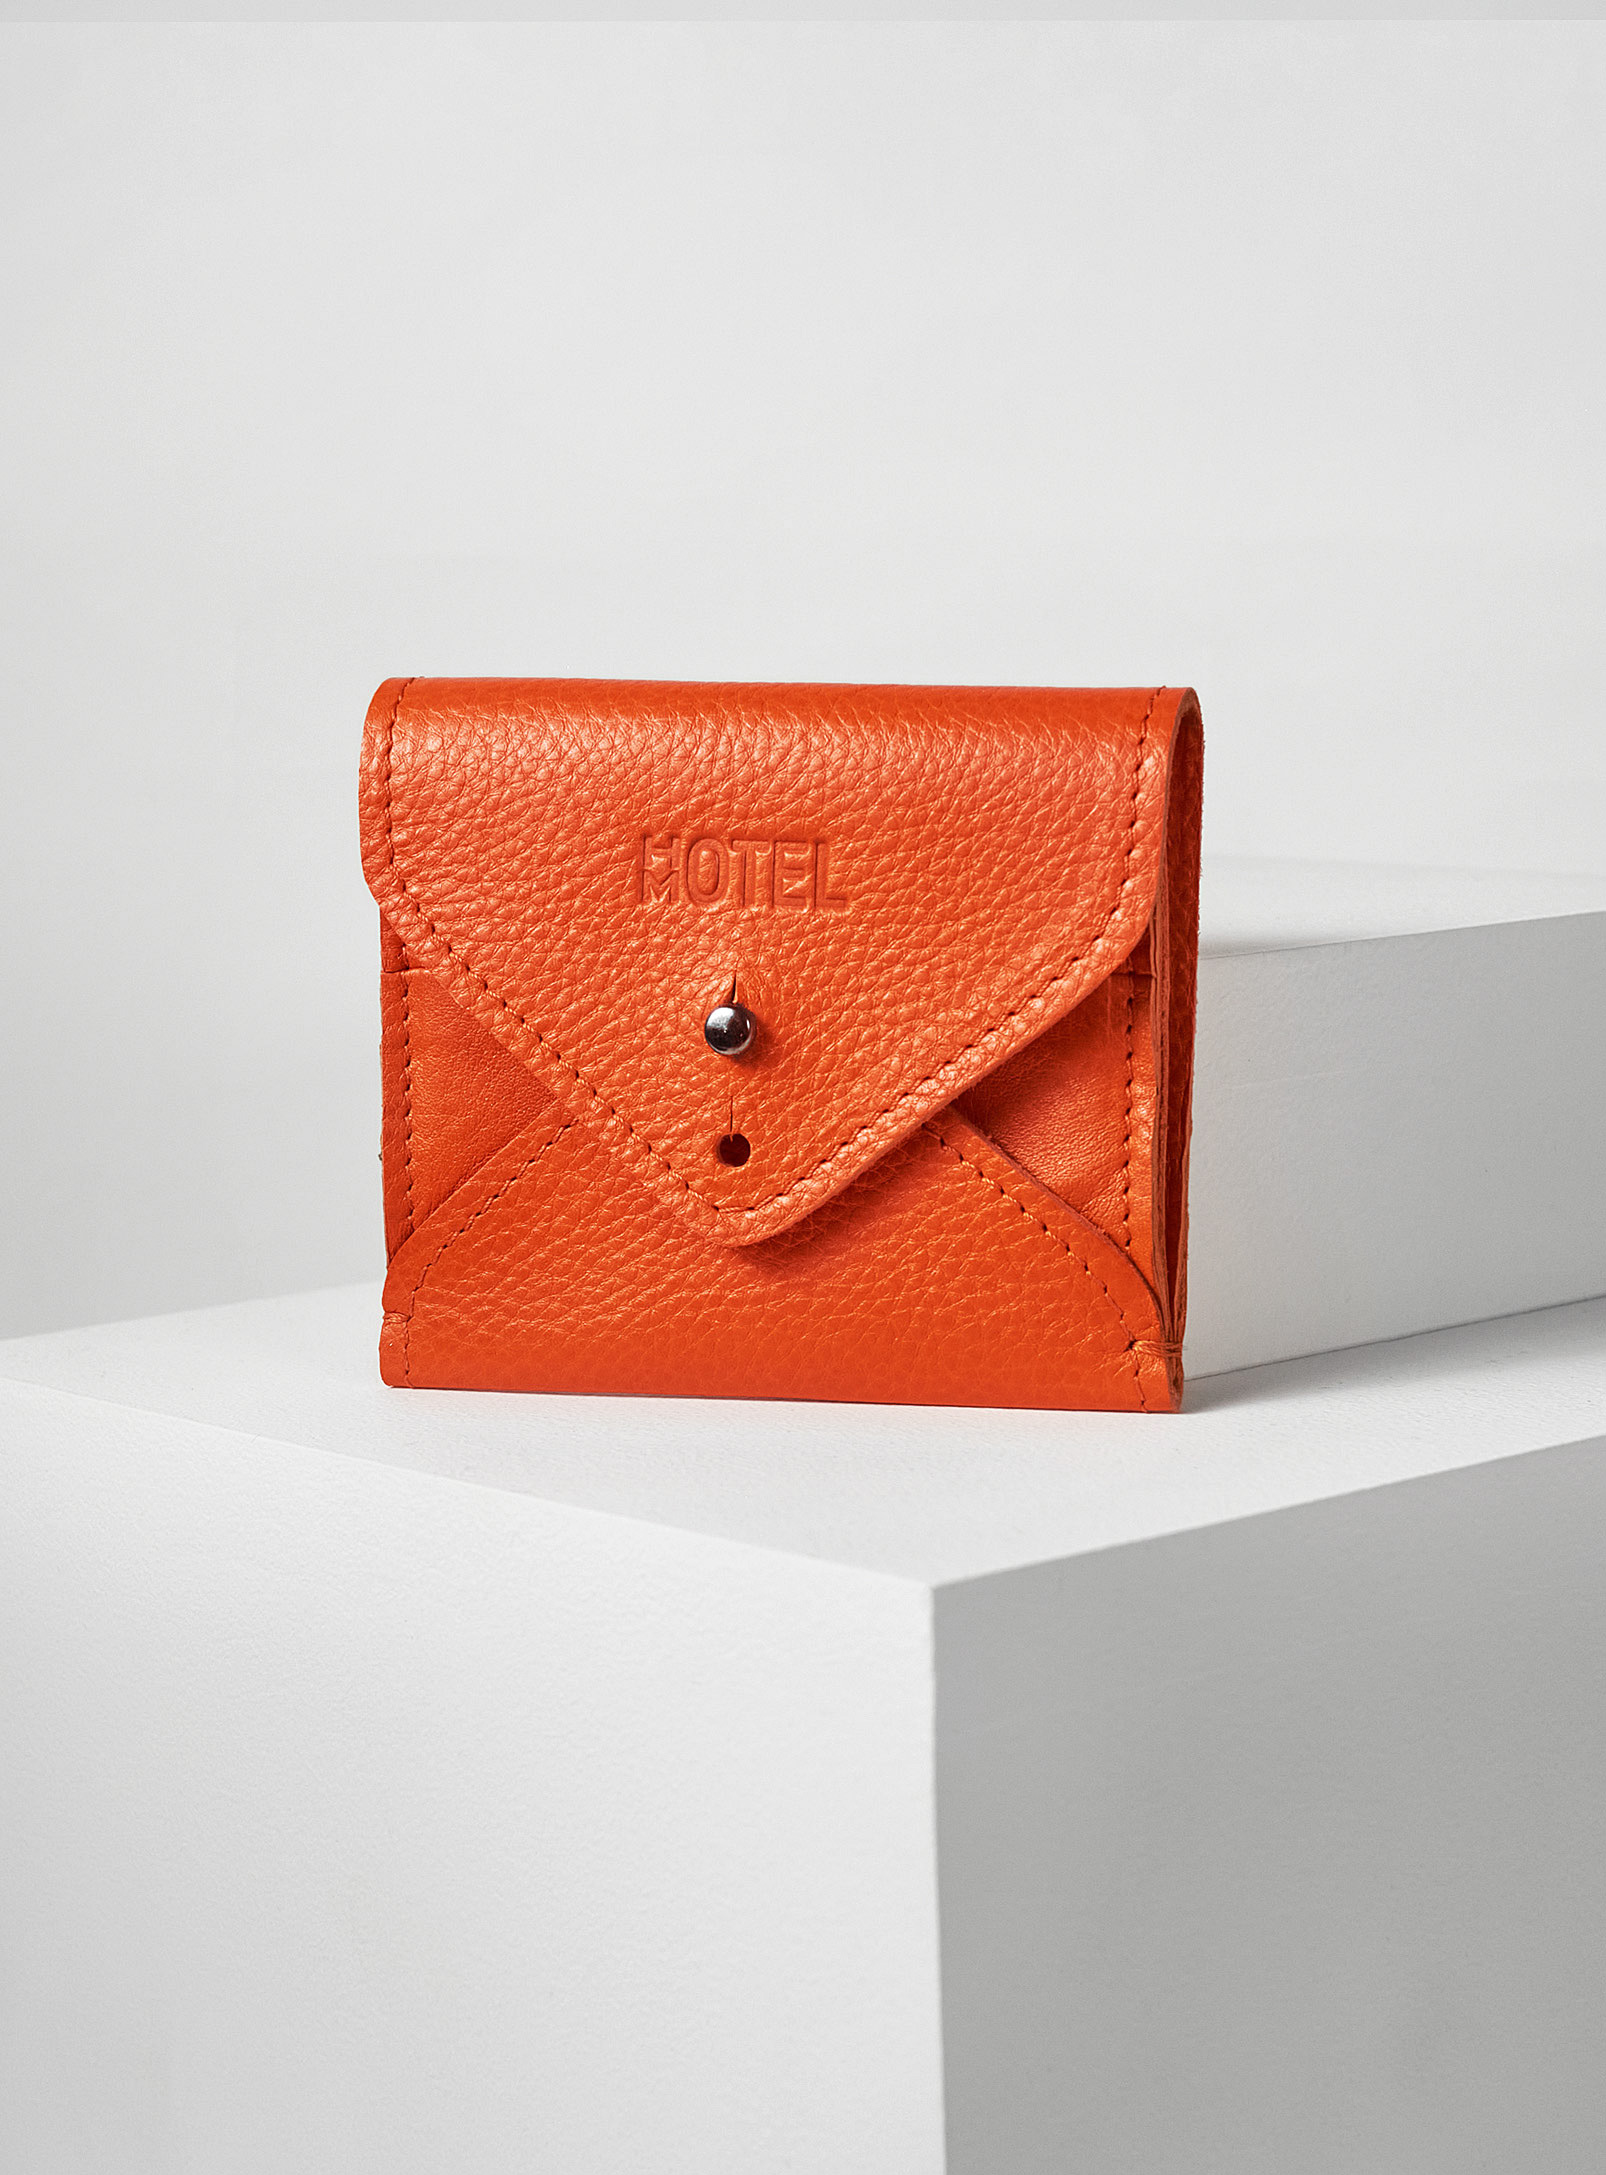 Hotelmotel Leather Envelope Wallet In Orange